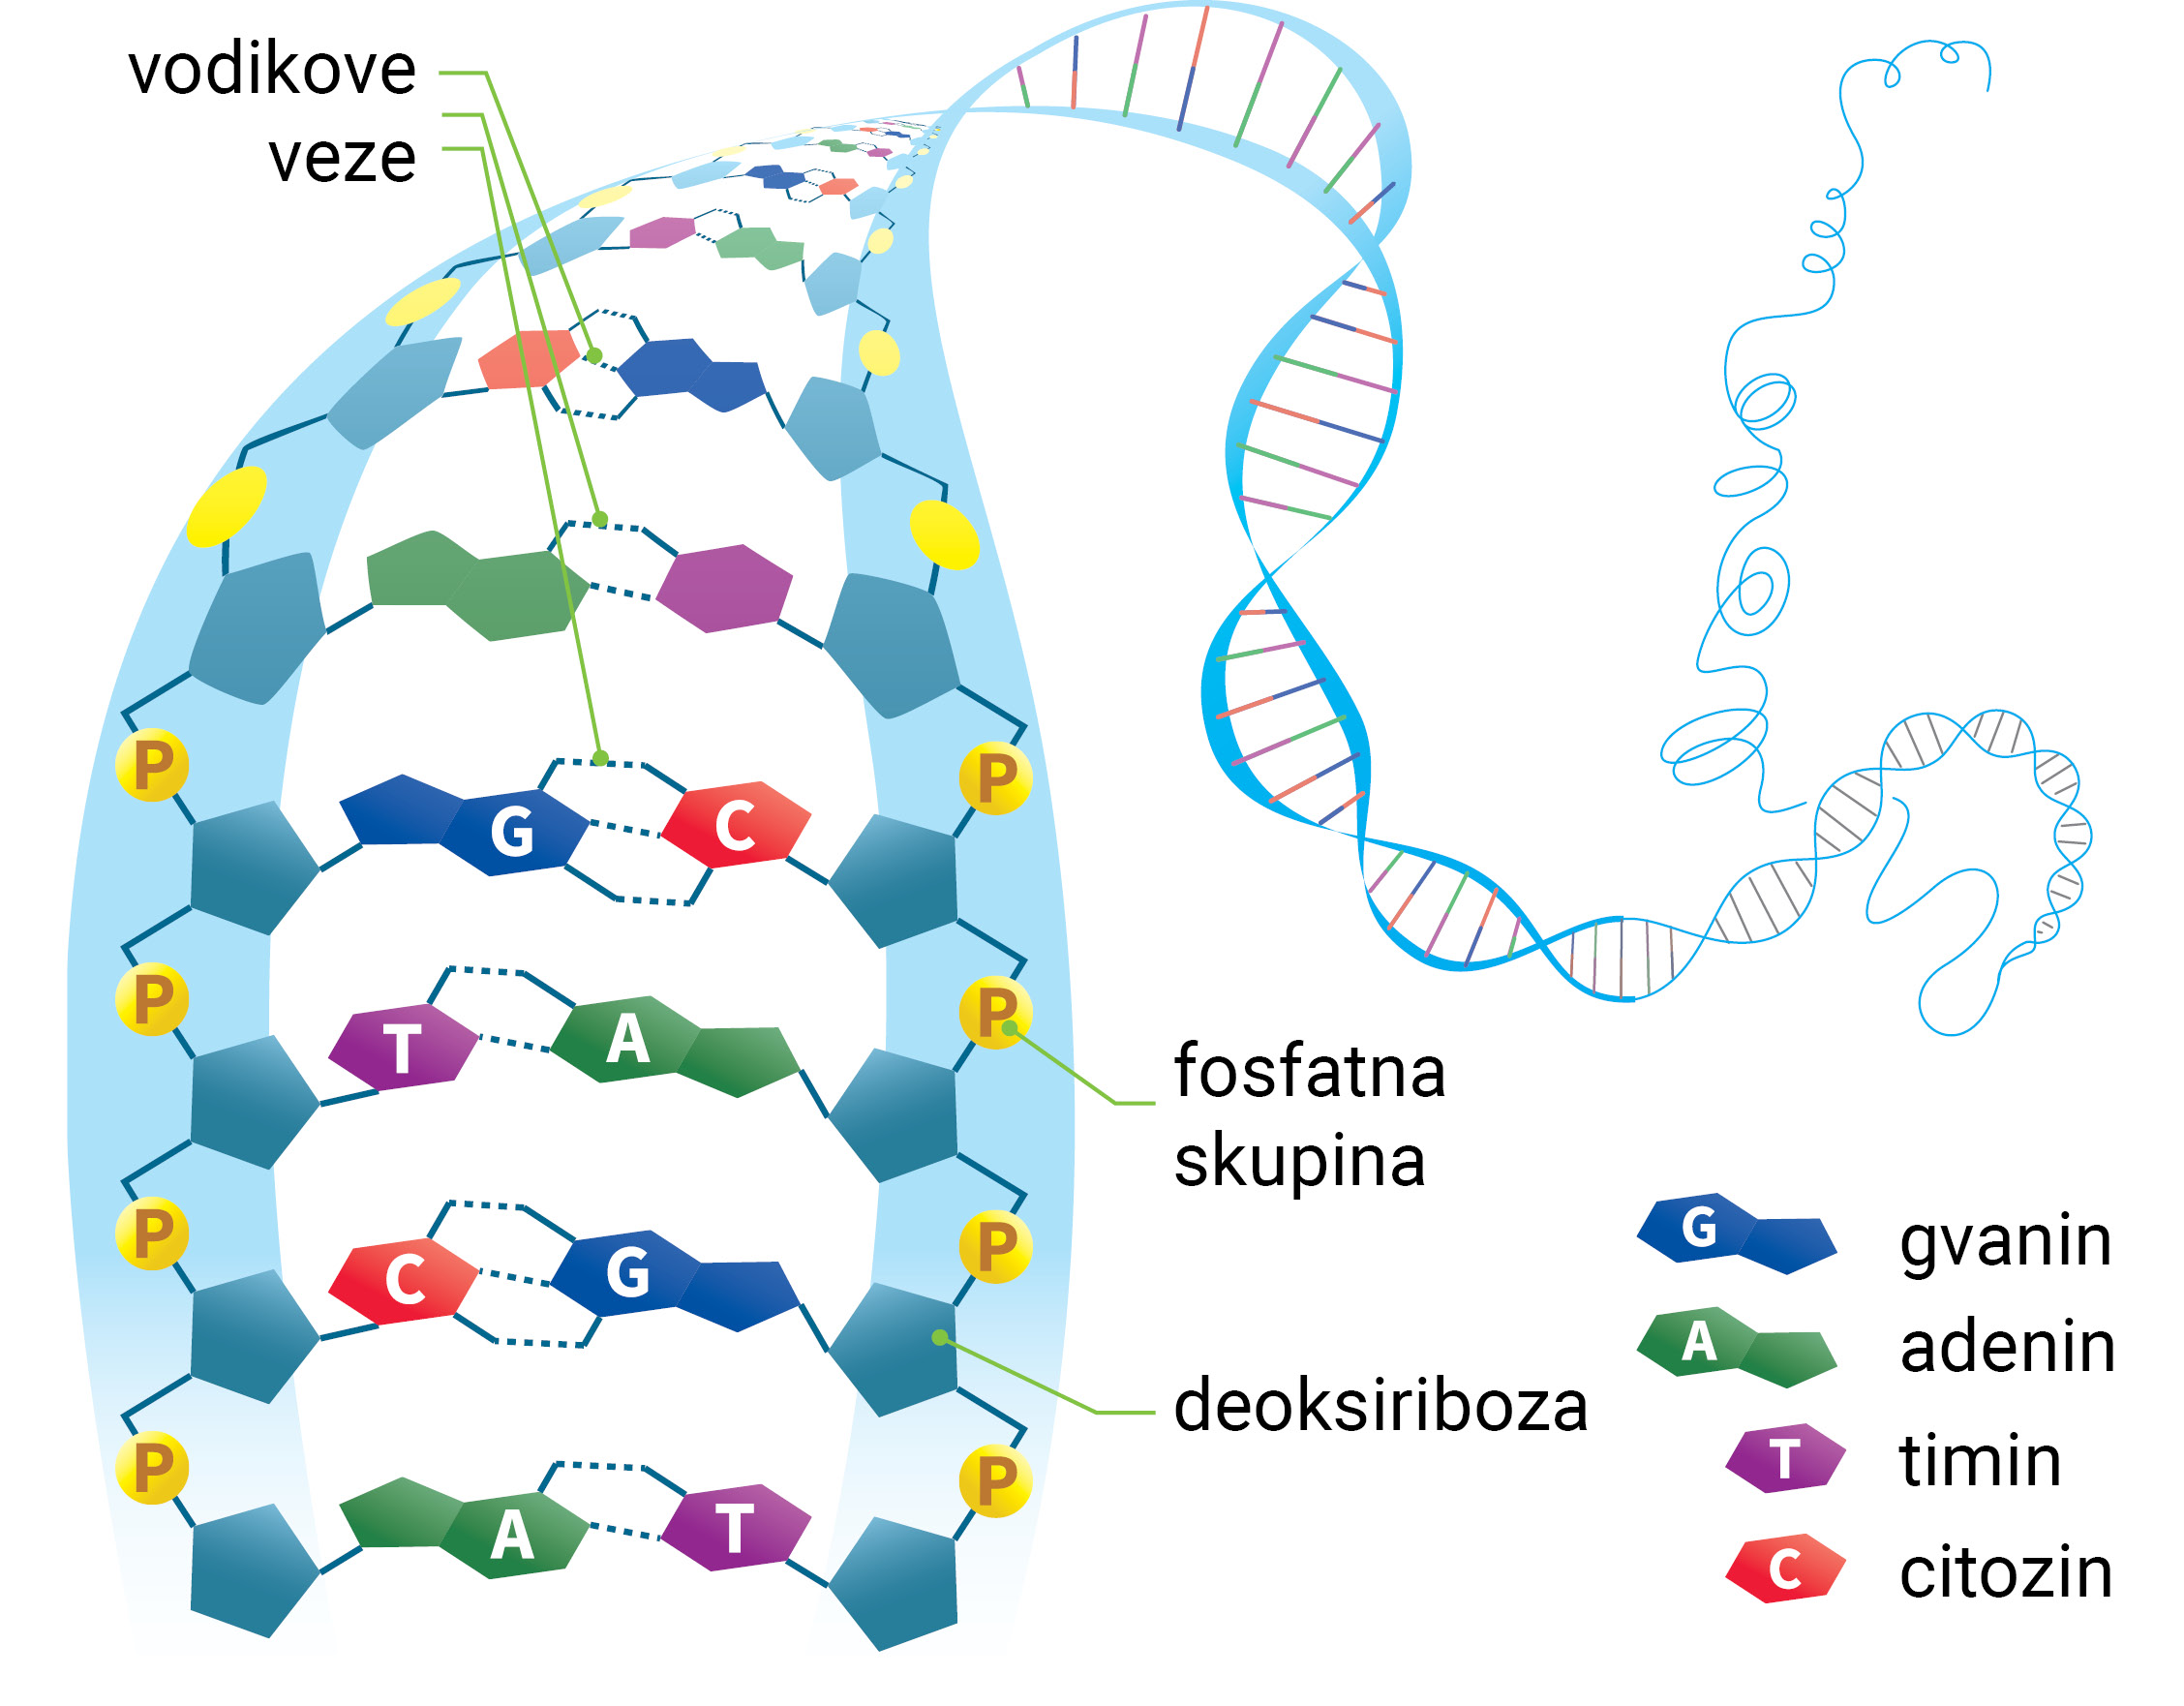 Na fotografiji je prikazana skica molekule DNA kao sastavnog dijela kromosoma. Naglašene su veze susjednih nukleotida oba polinukleotidna lanca i označene su- fosfatna skupina. Dušikove baze unutar polinukleotidnih lanaca označene su slovima i različitim bojama (Gvanin=G, plava, Adenin=A, zelena, Timin=T, ljubičasta, Citozin=C, crveno). Šećerne osnove (deoksiriboza) nukleotida su označene. Nasuprotni komplementarni lanci spojeni su vodikovim vezama.